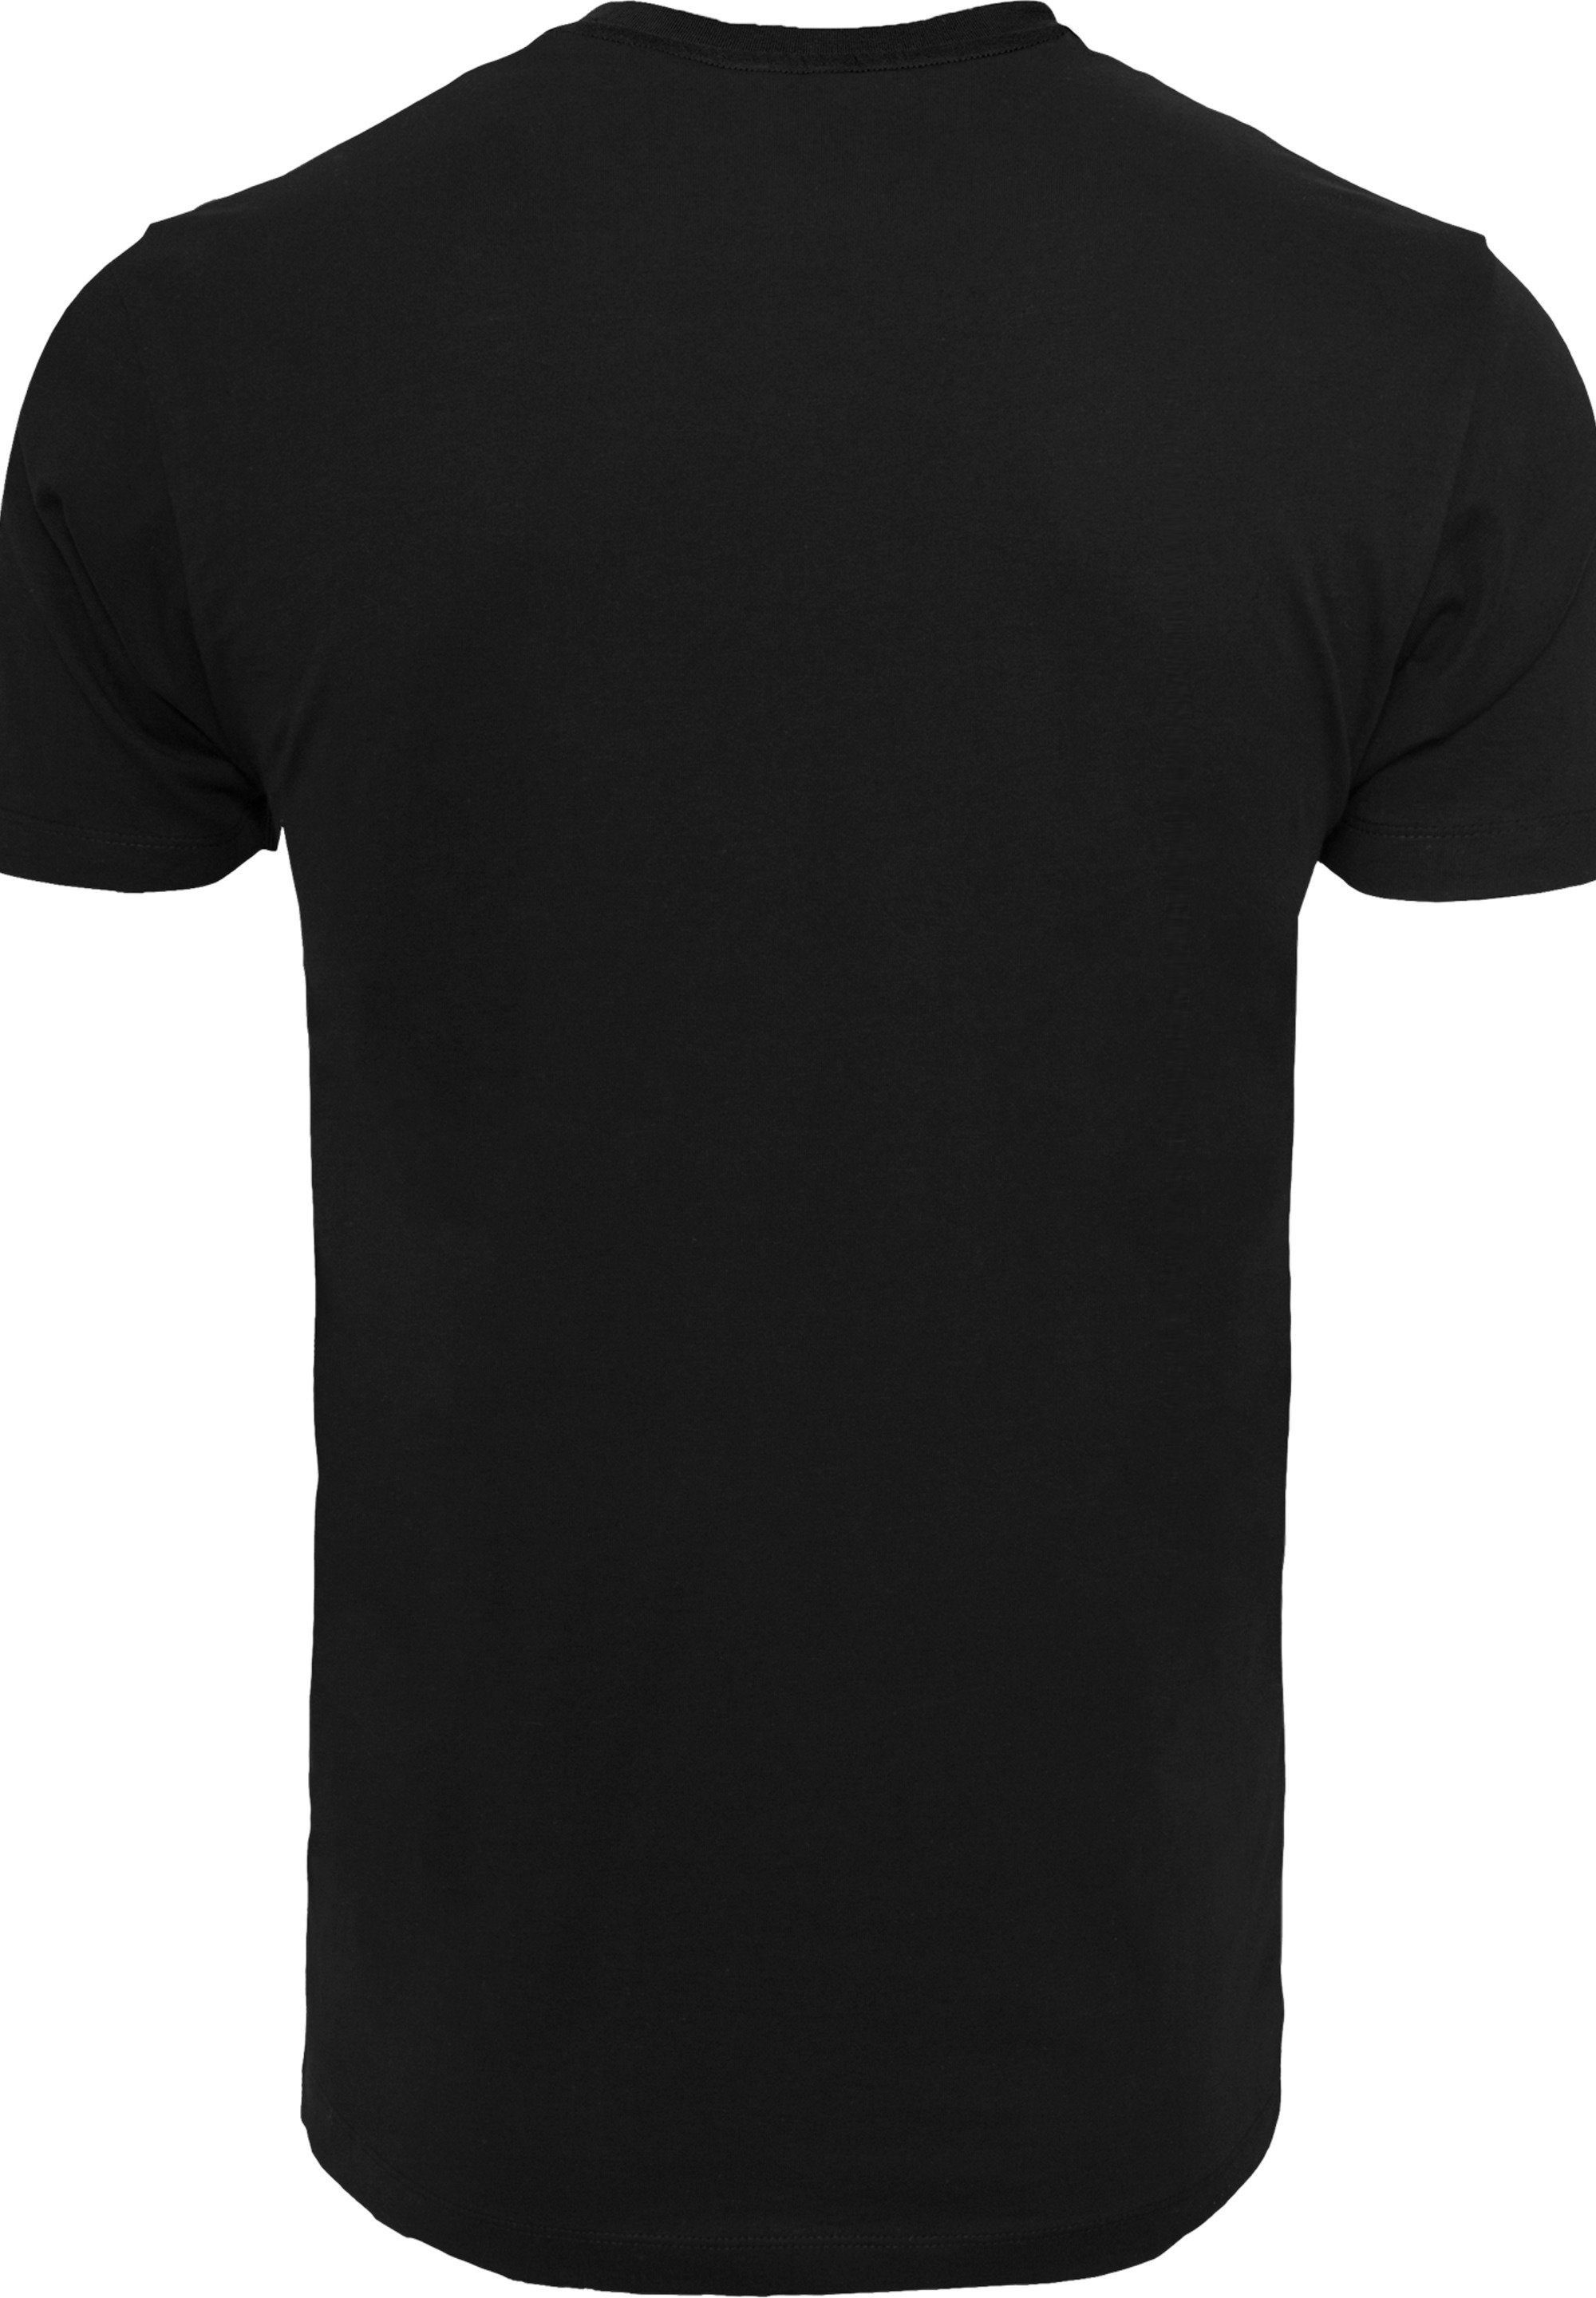 F4NT4STIC That's All Herren,Premium schwarz Rockband Merch,Regular-Fit,Basic,Bandshirt Genesis 45 T-Shirt